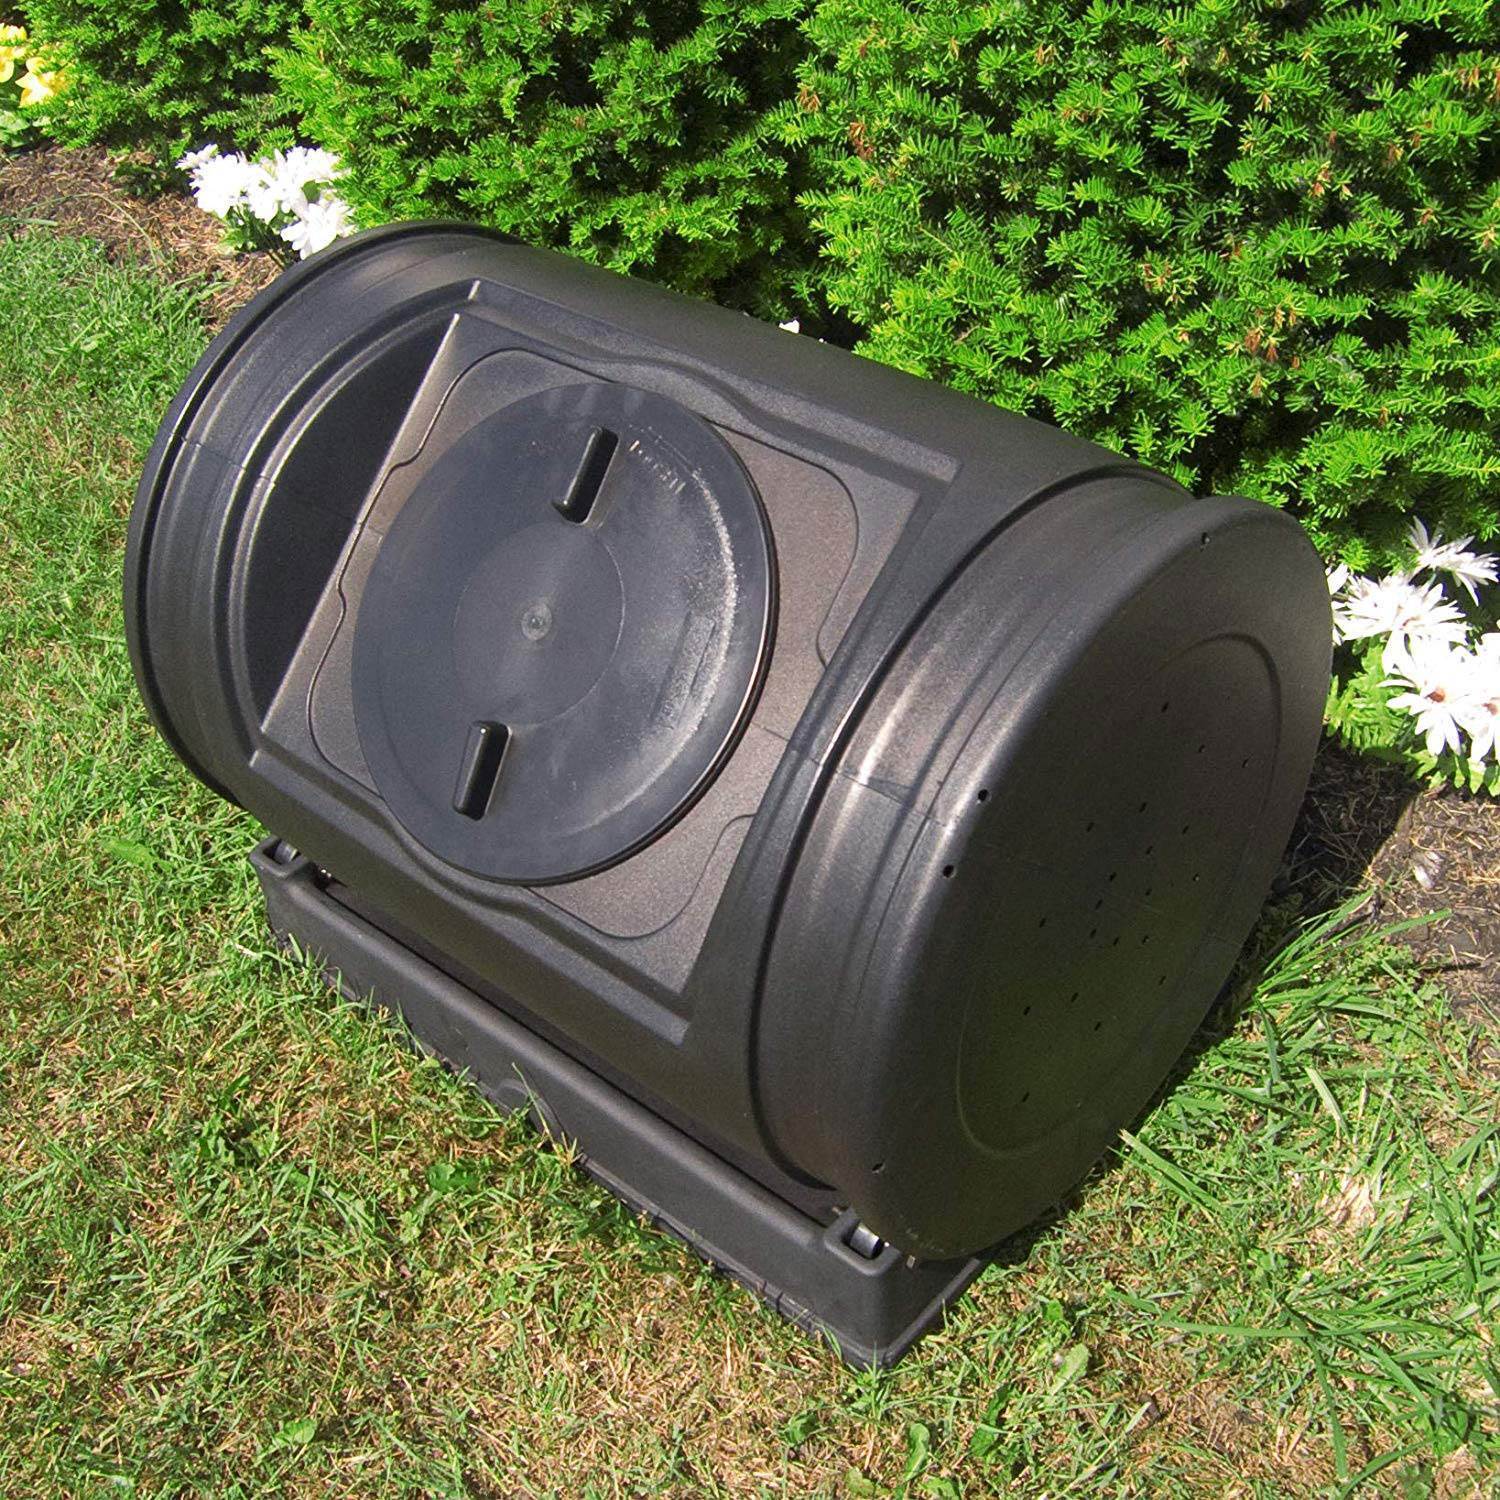 thinkstar Compost Wizard Jr Outdoor Garden Compost Bin Container Black